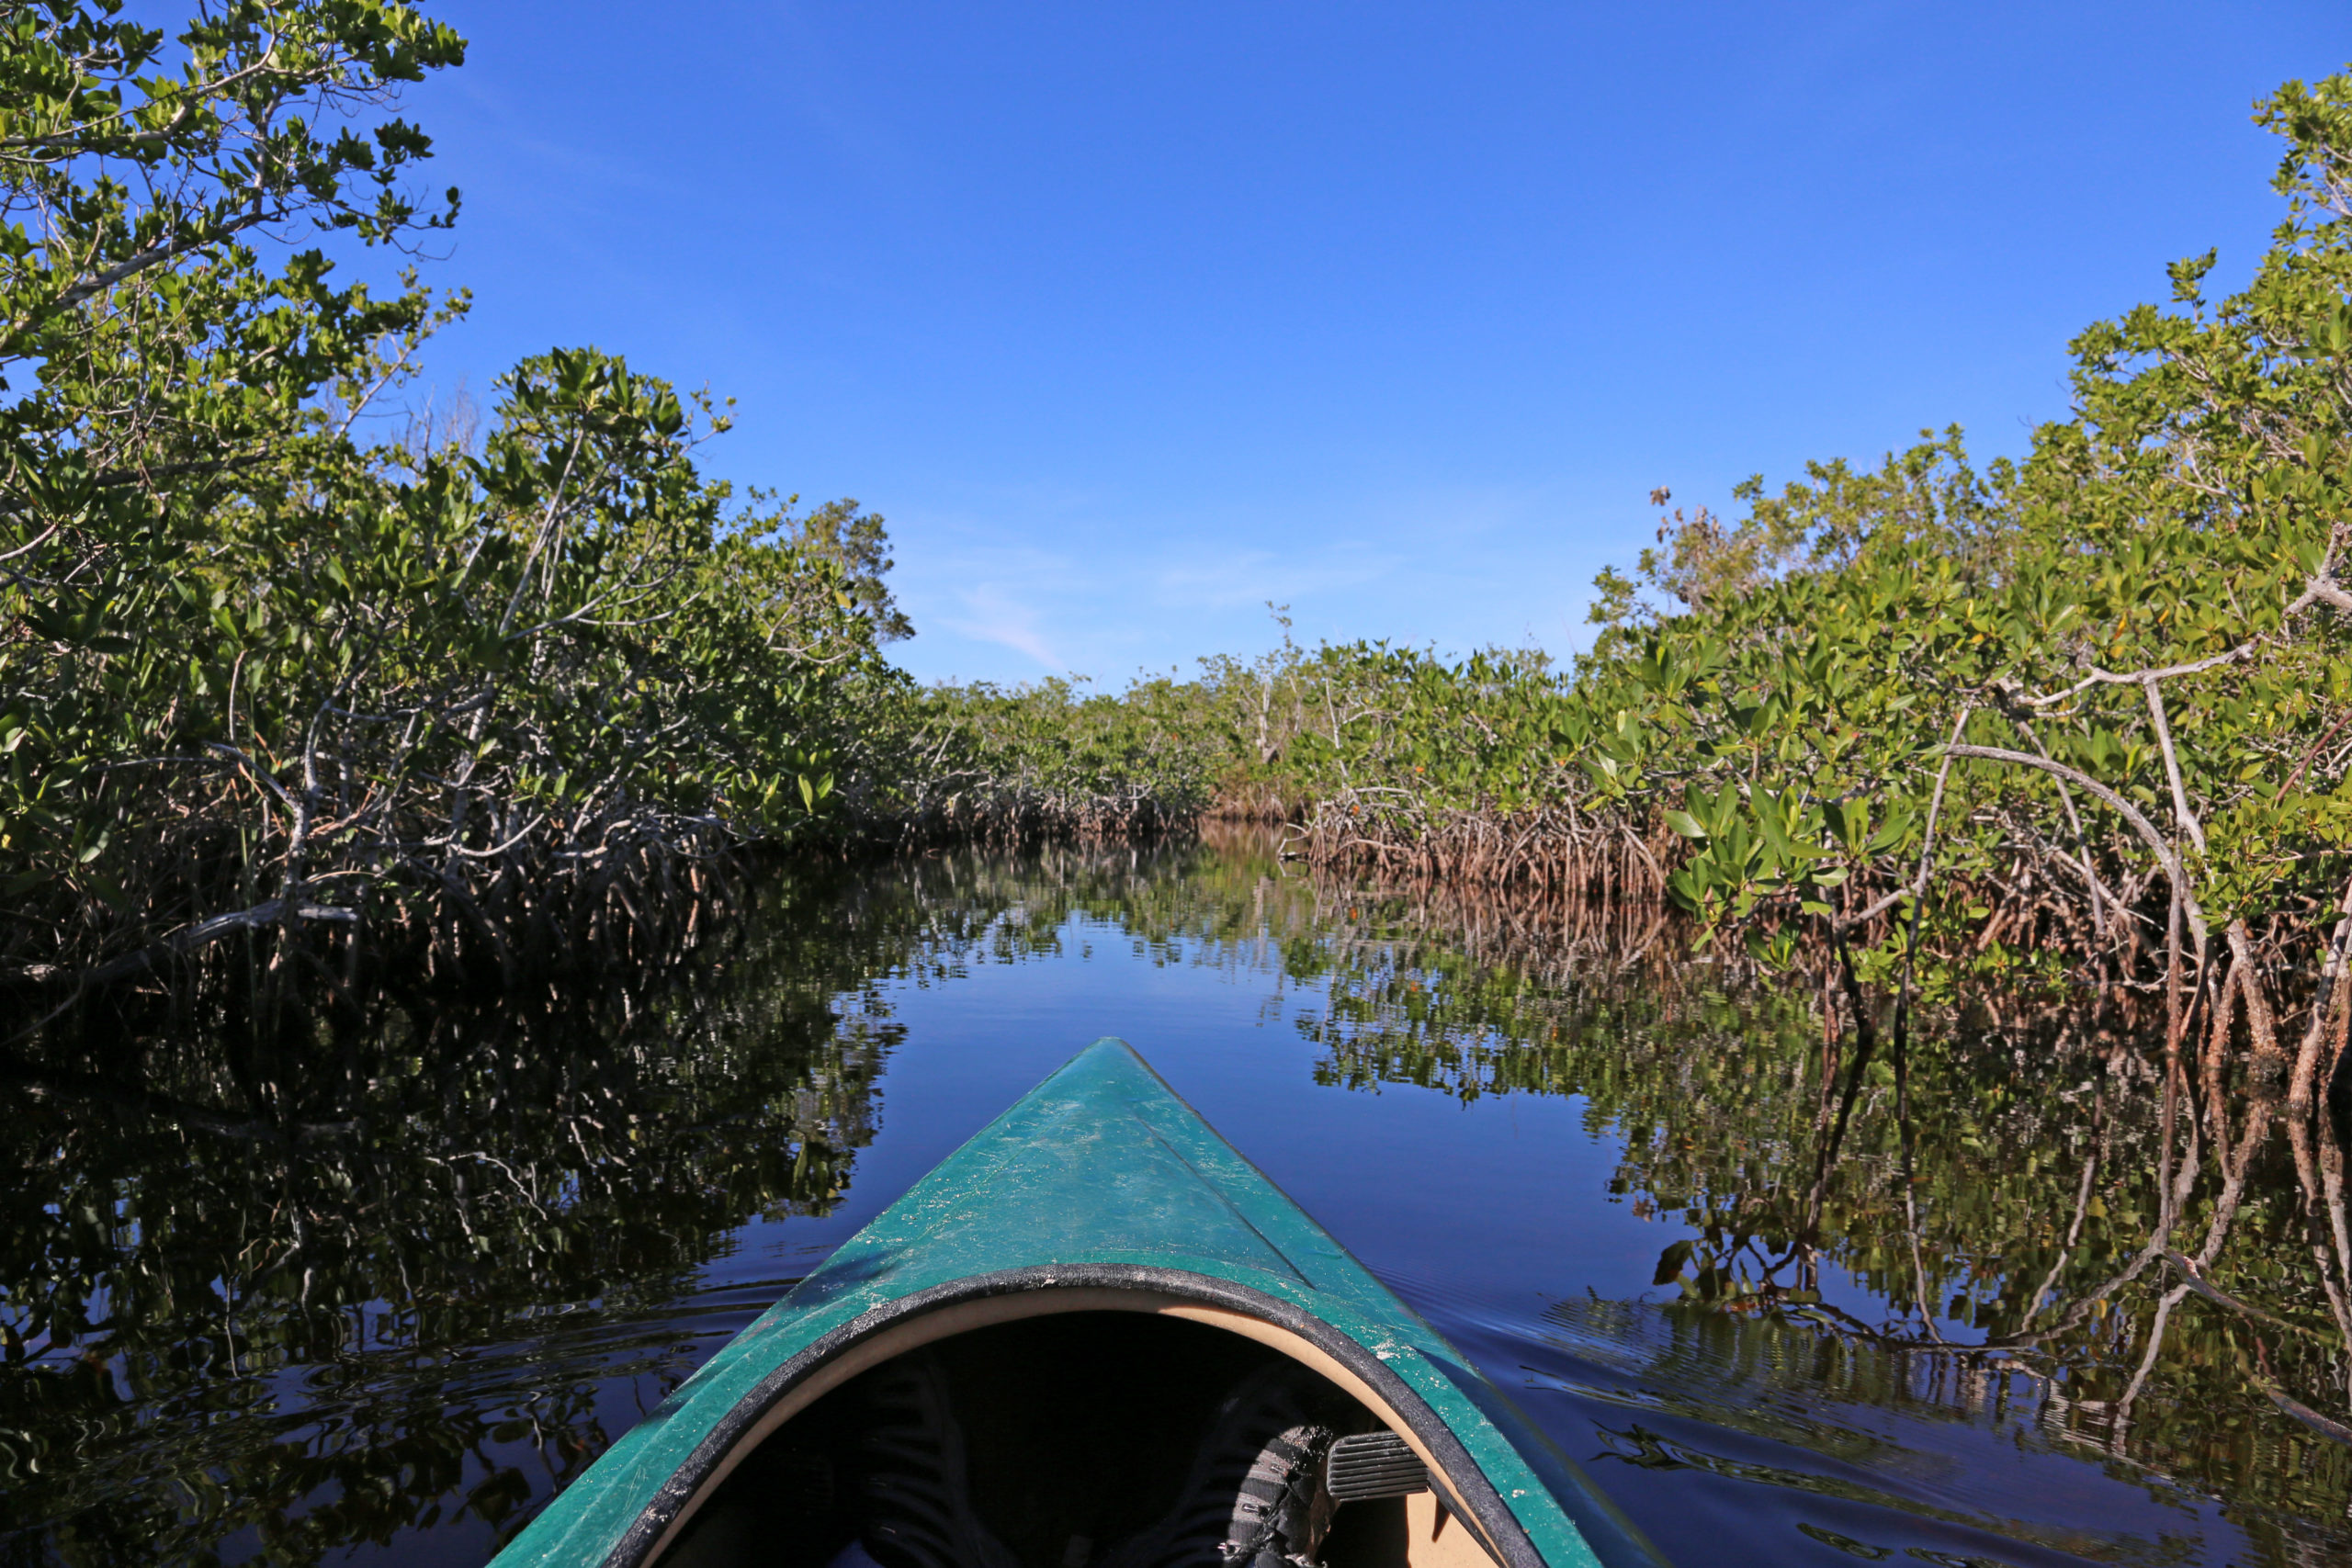 Kayak in the Mangroves